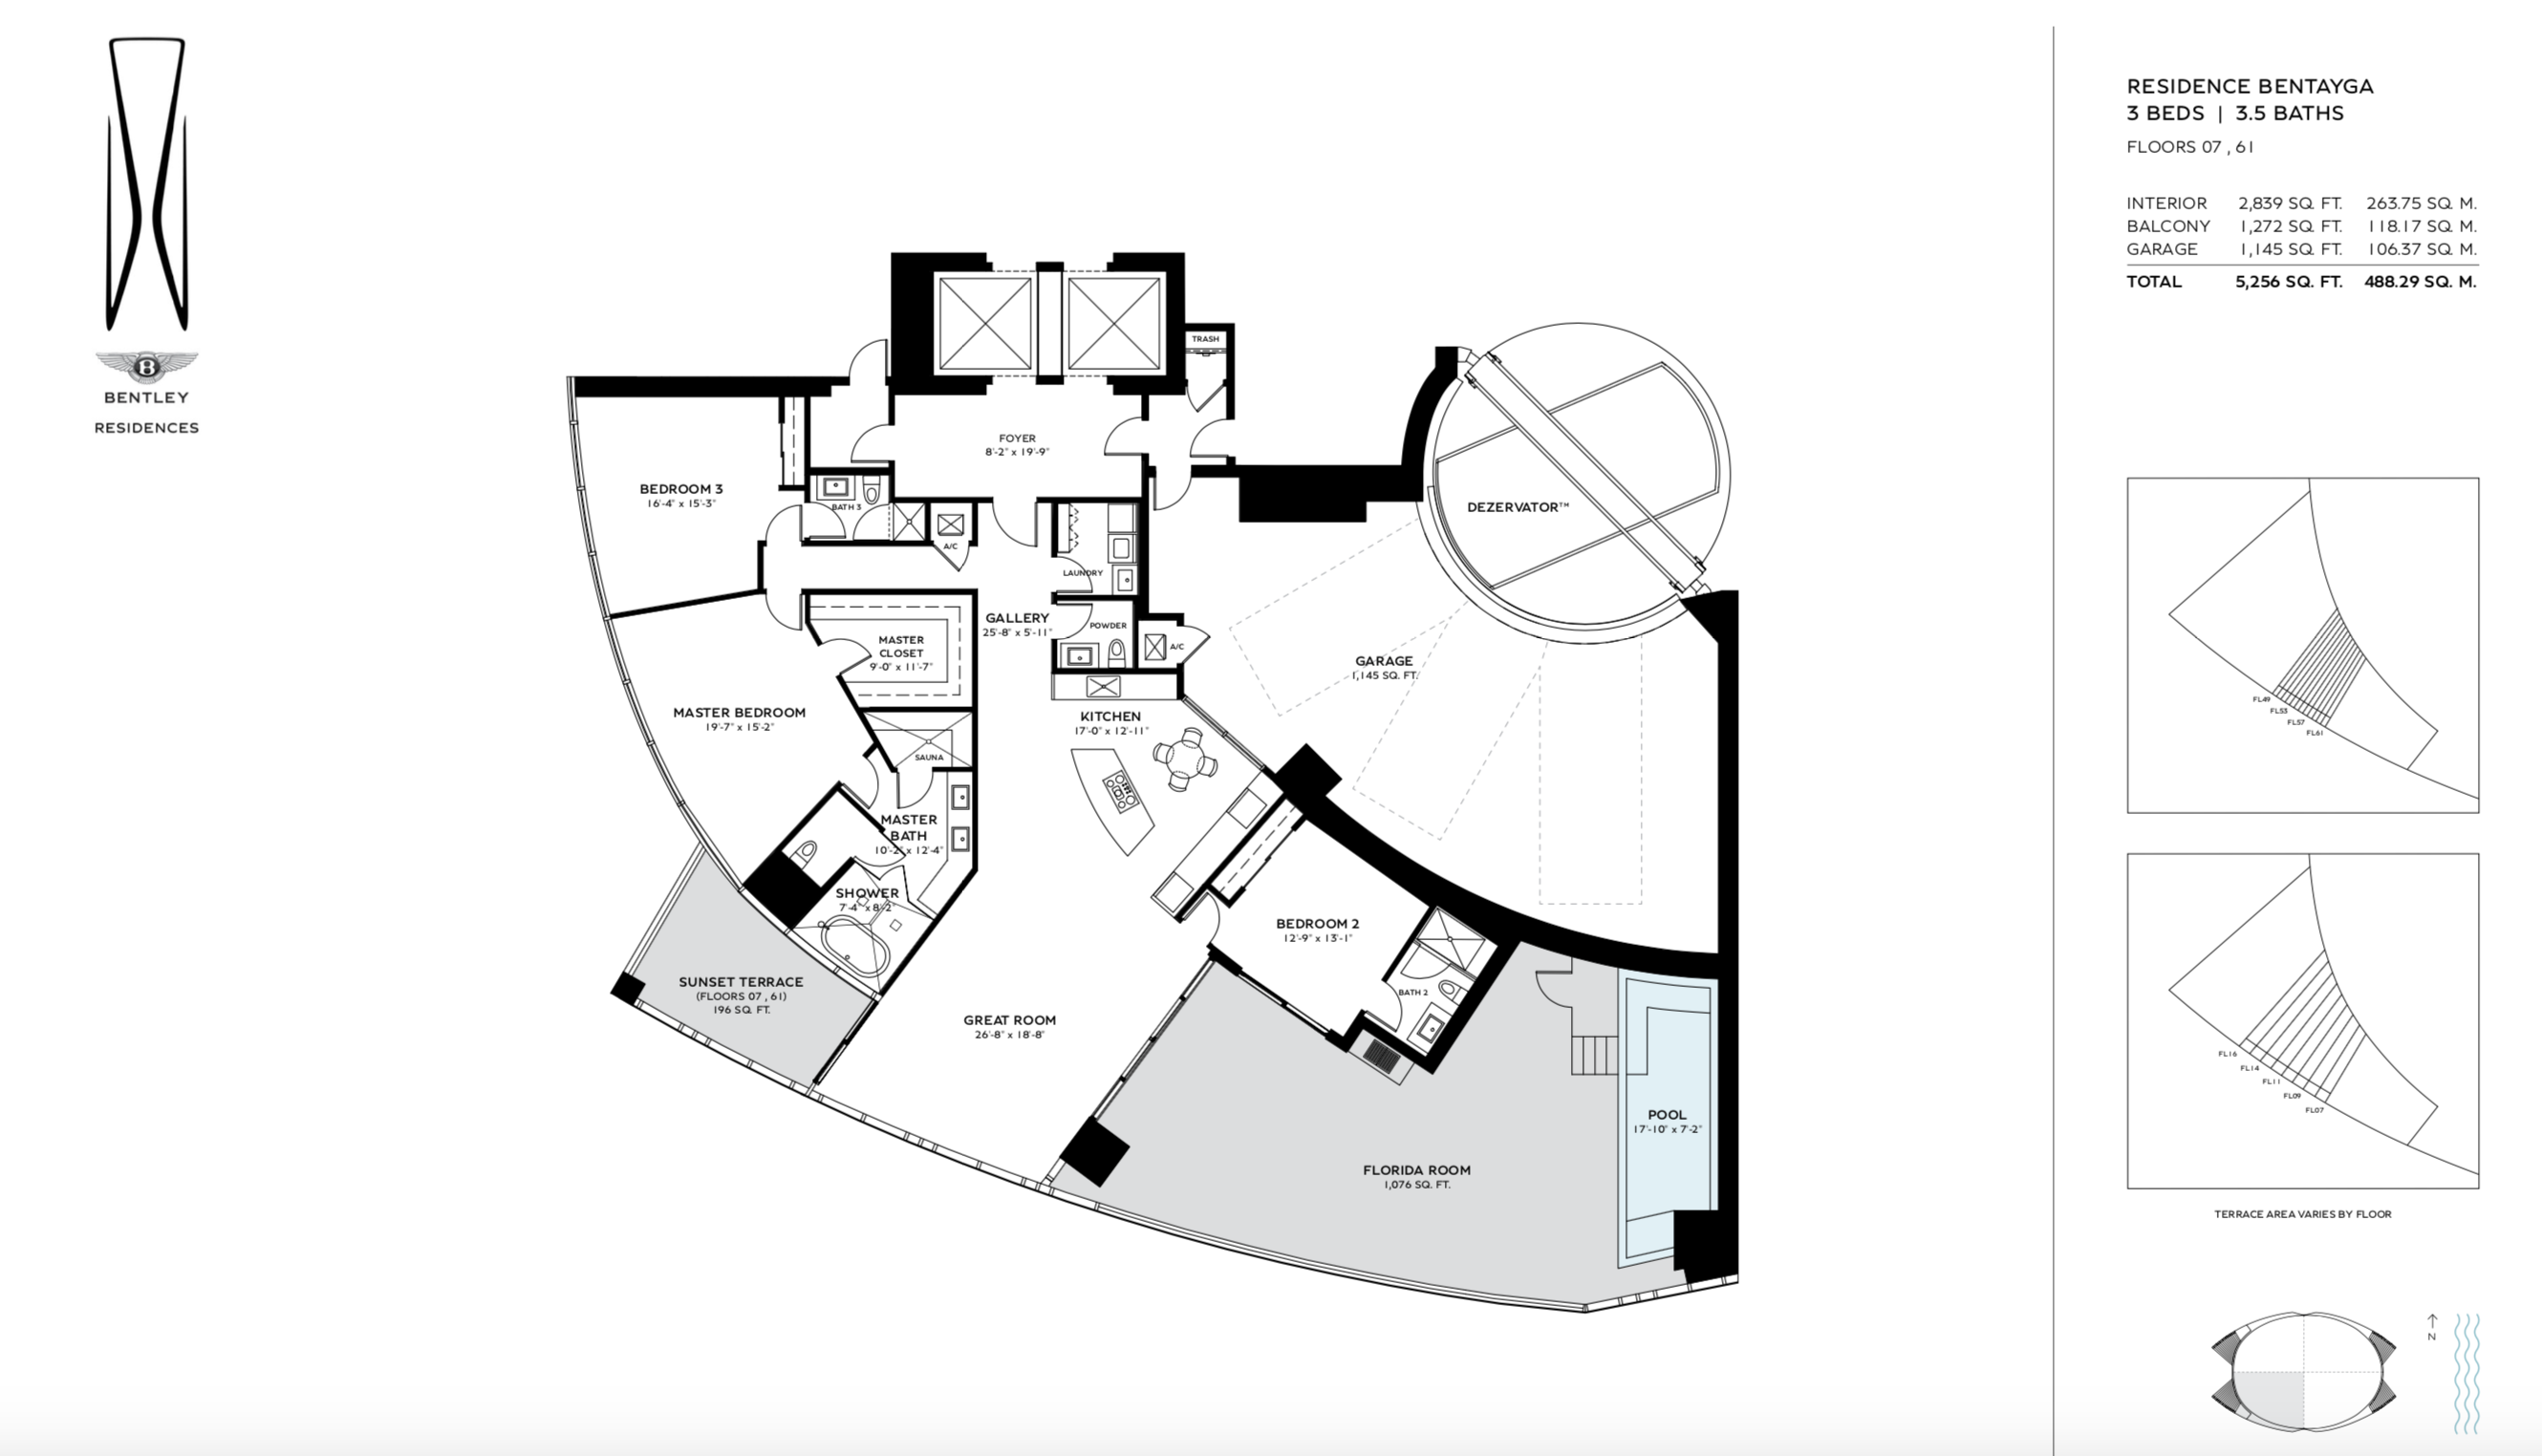 Bentley Residences Sunny Isles  | Residence Bentayga | SW Exposure | 3 Be/3.5Ba | 2,839 SF | Floors 07 & 61